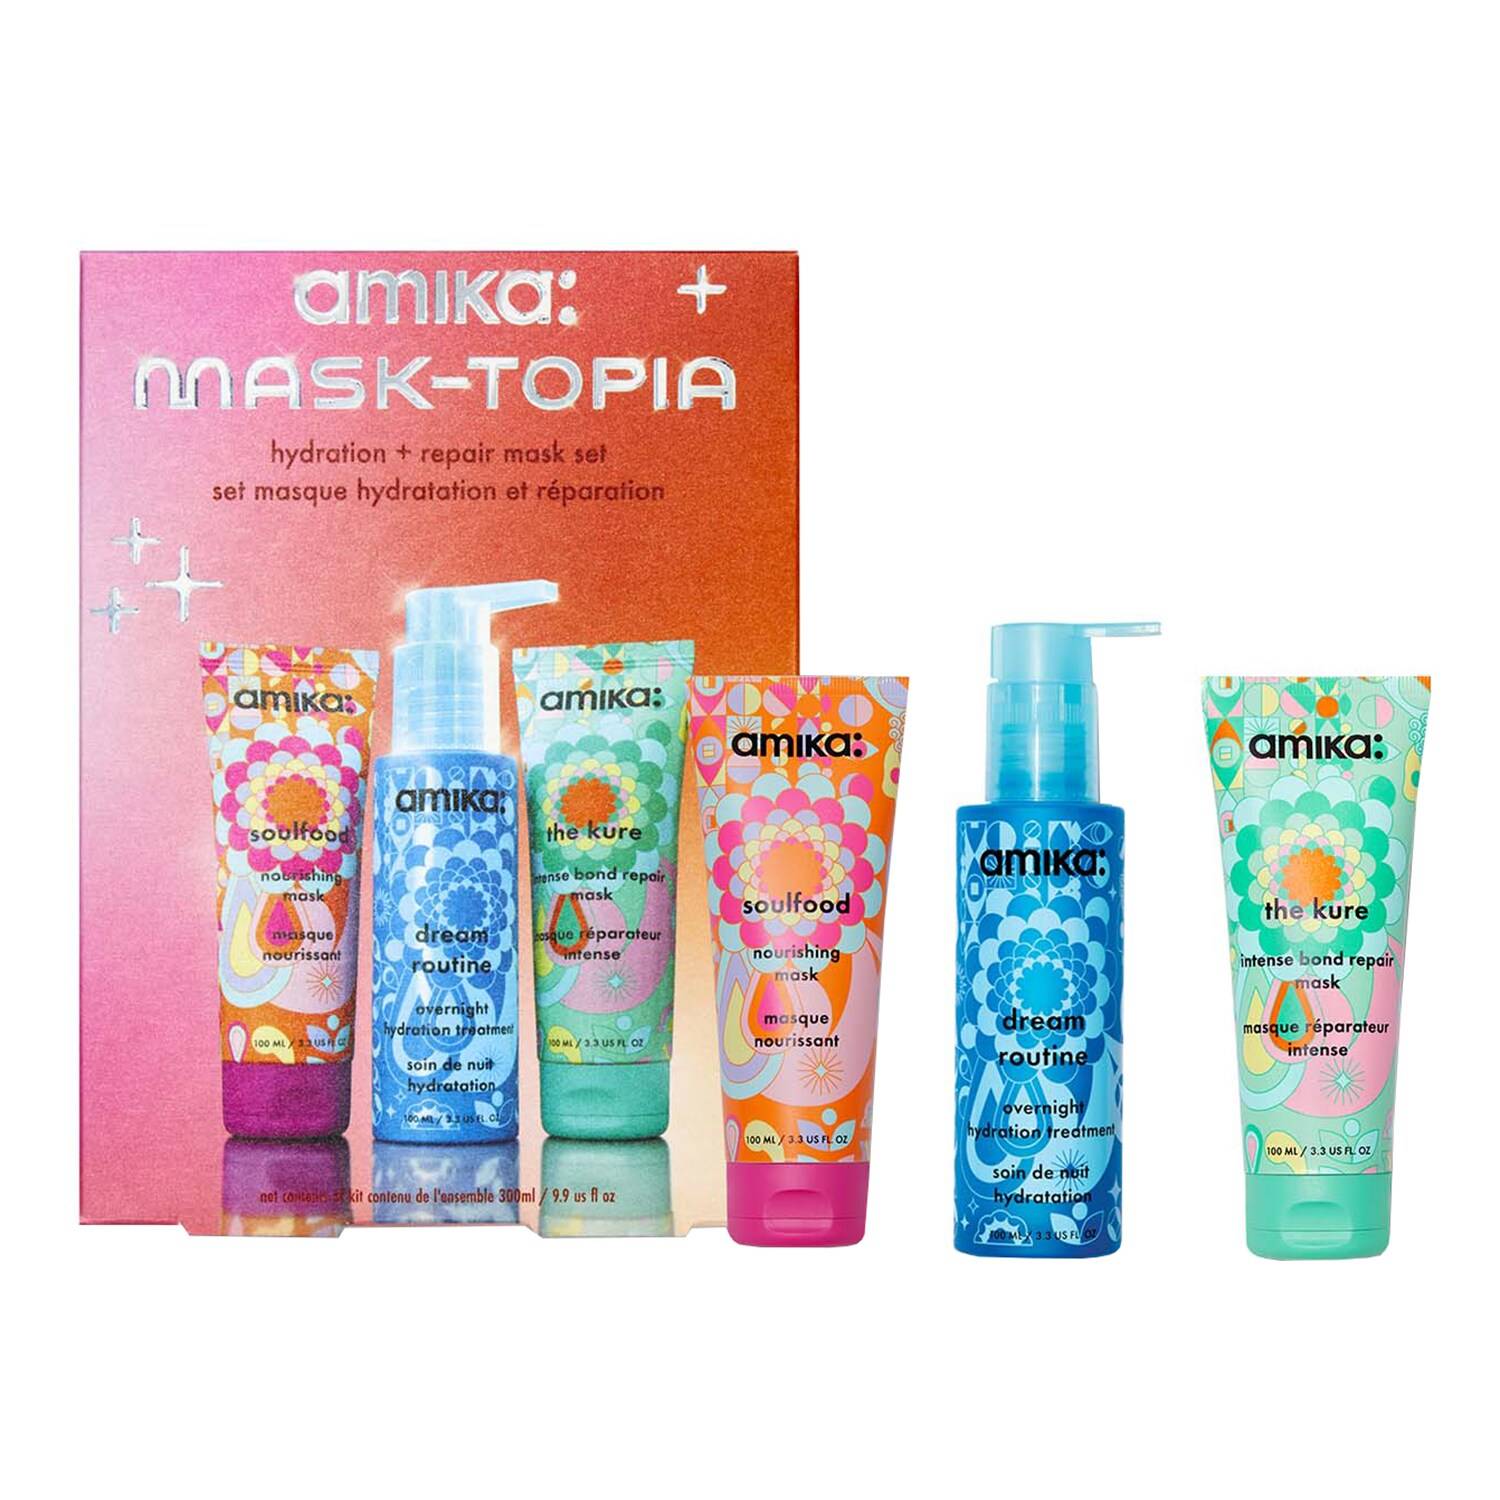 Amika Mask-Topia Hydration + Repair Set